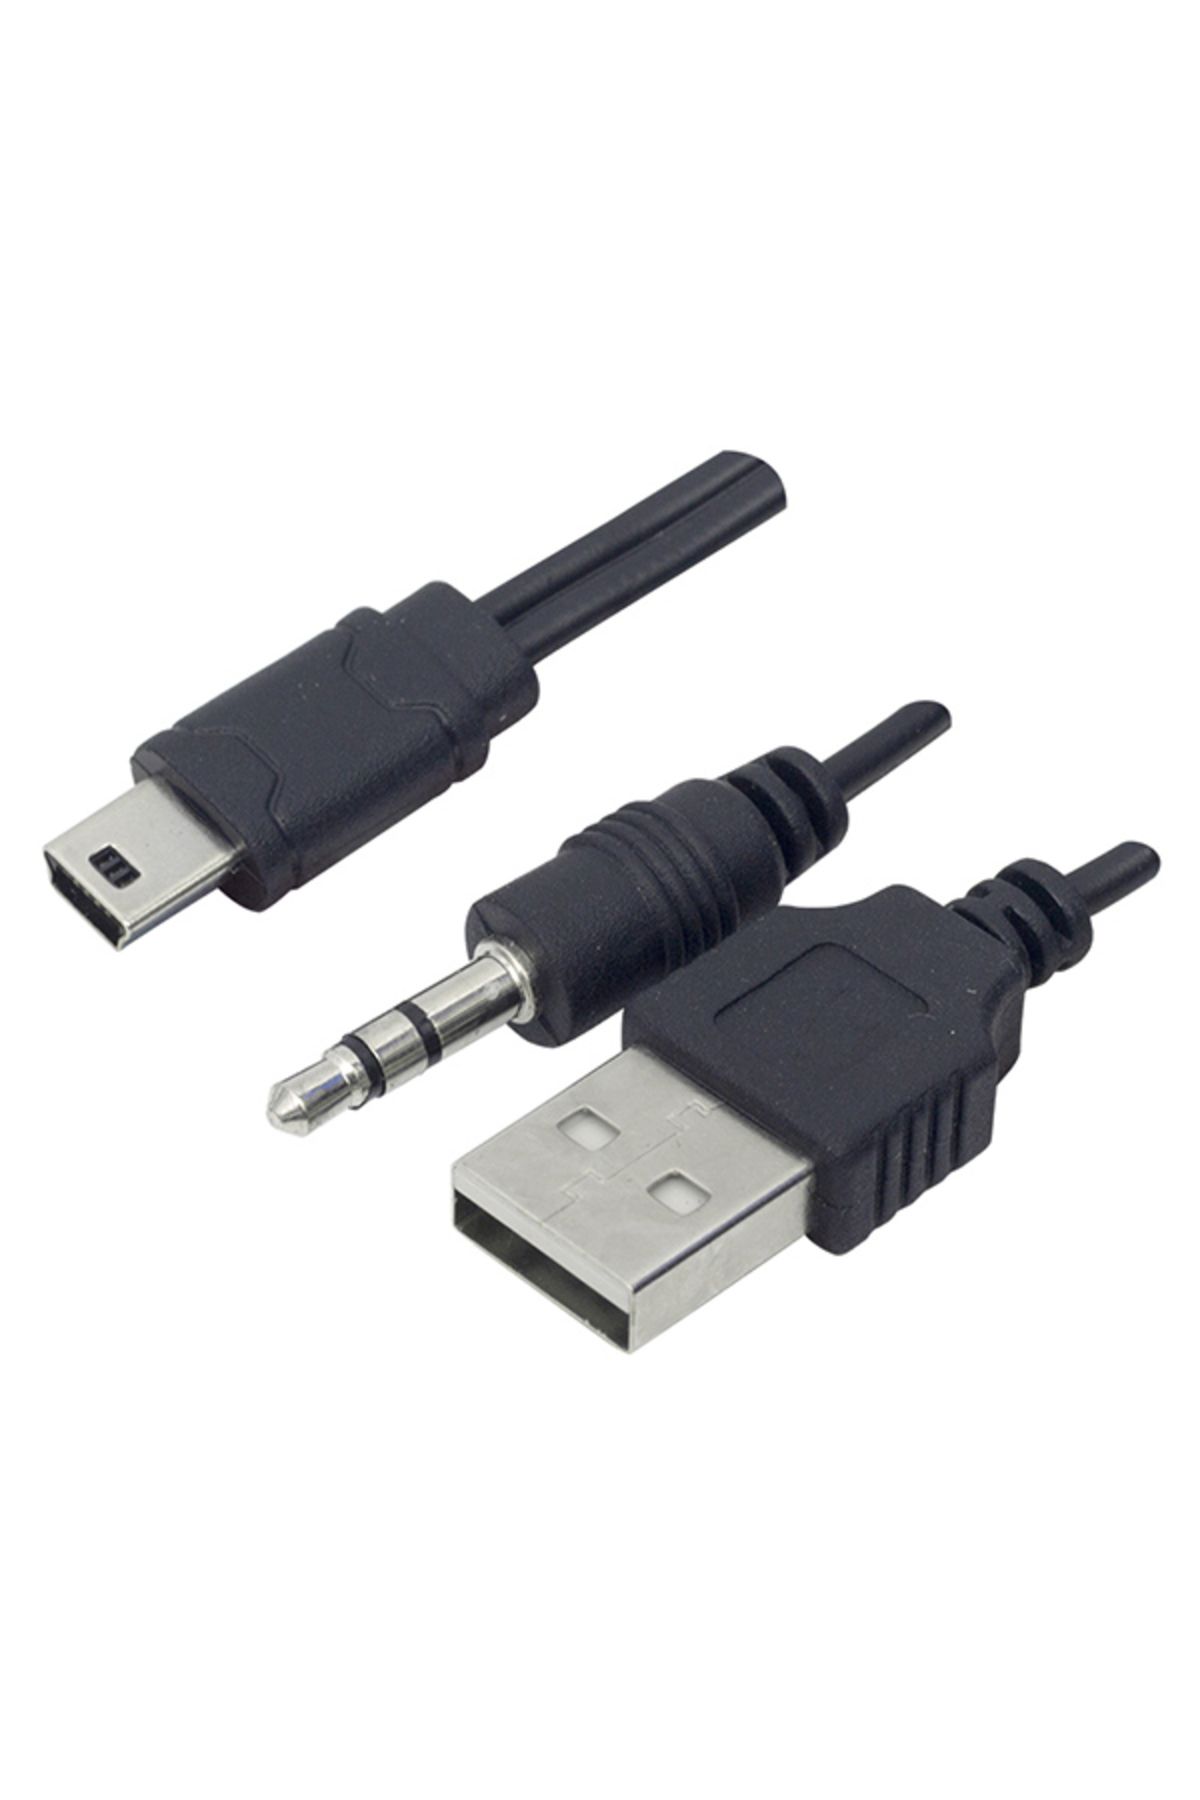 TechStil POWERMASTER USB TO AUX - 5 PİN KABLO (MÜZİK KUTUSU KABLOSU) * PL-8624 40CM